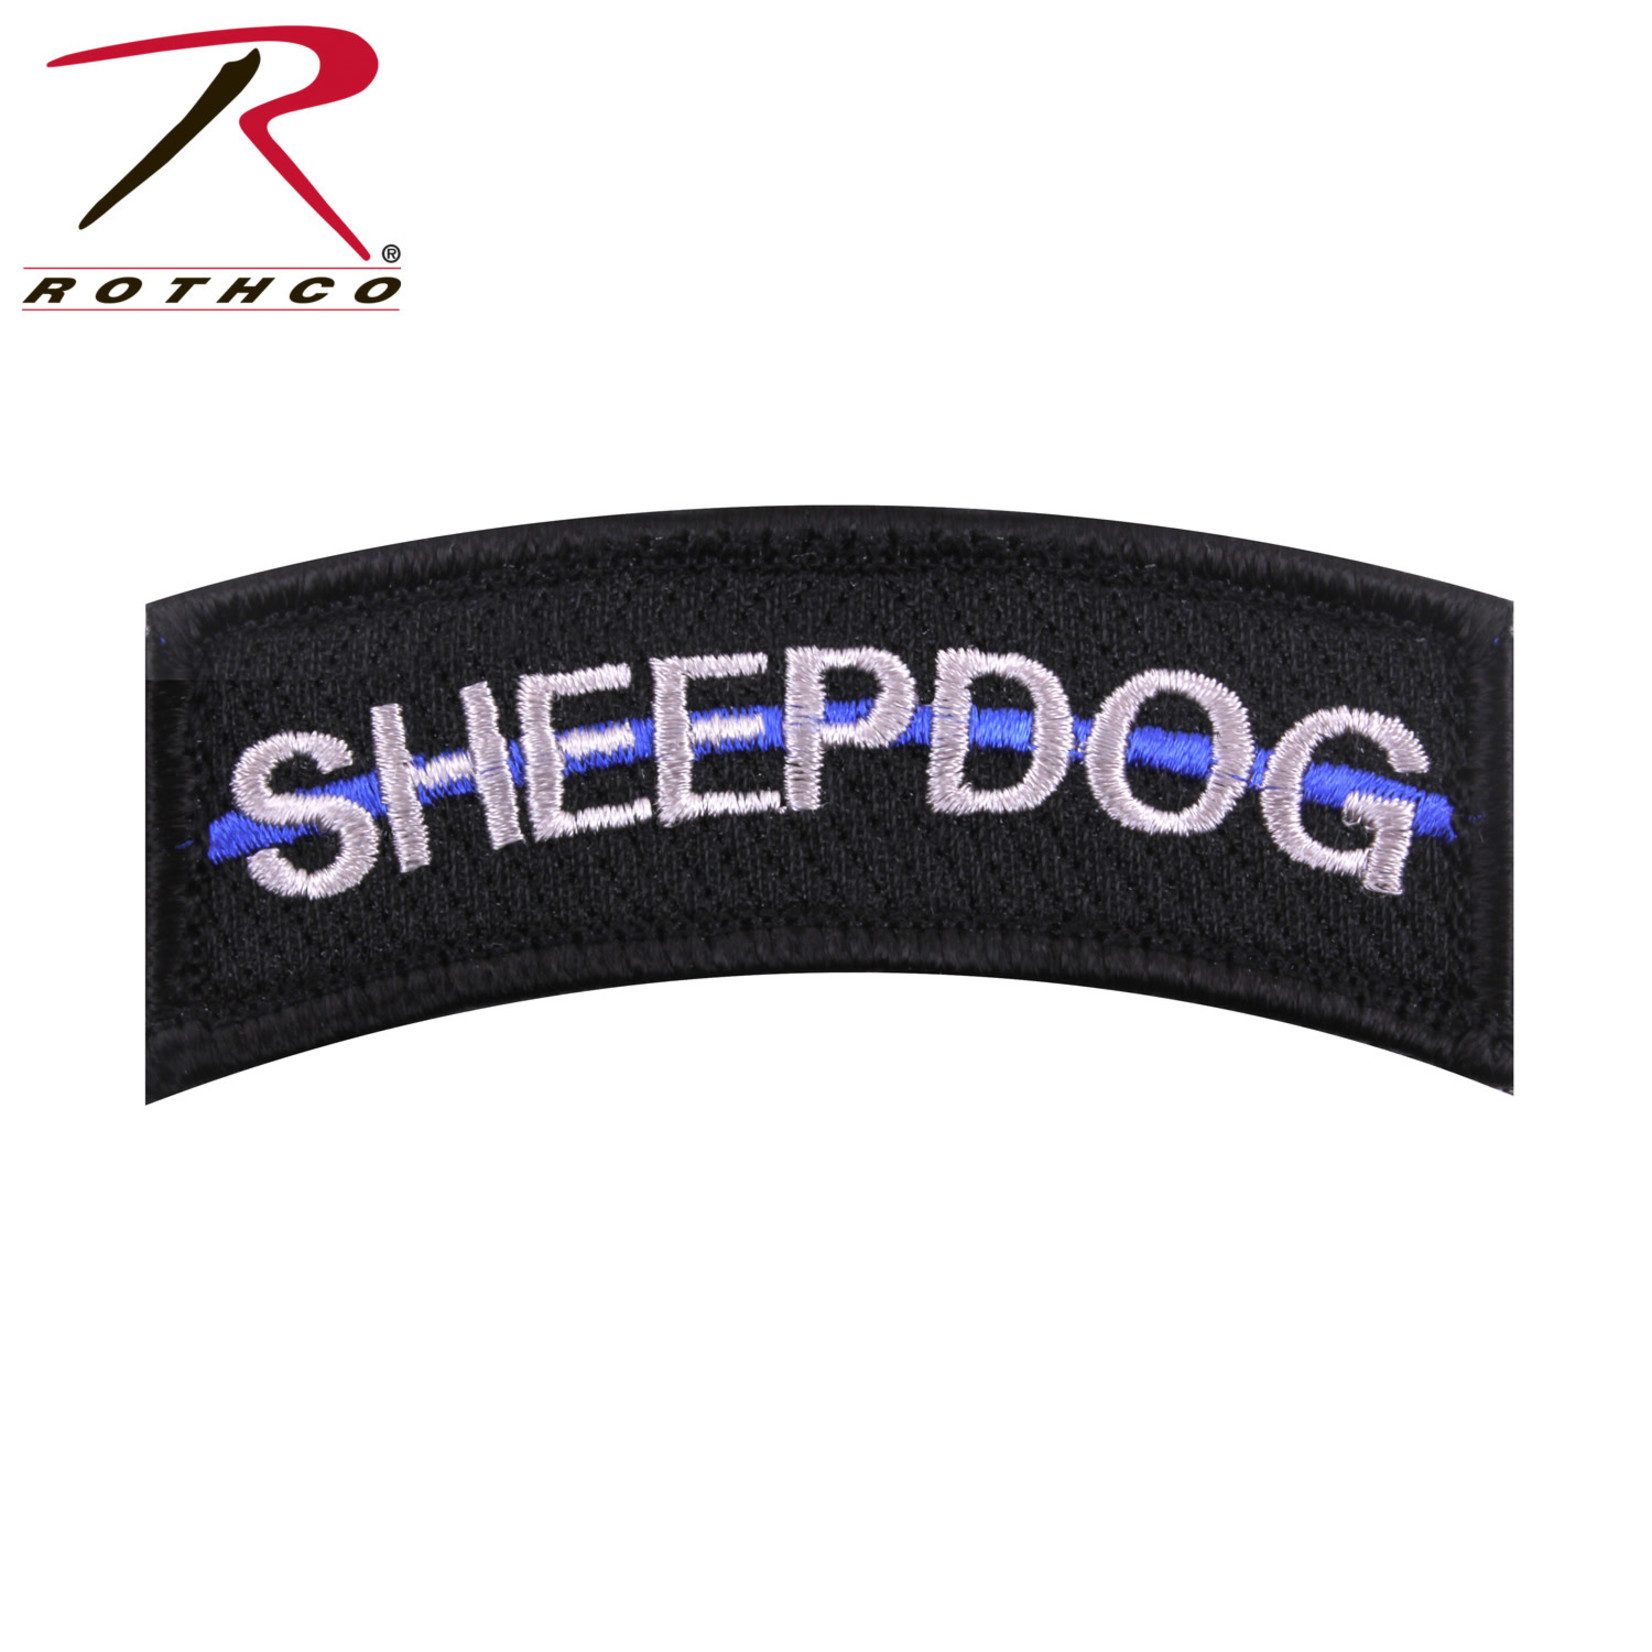 Rothco Rothco Thin Blue Line Sheepdog Morale Patch